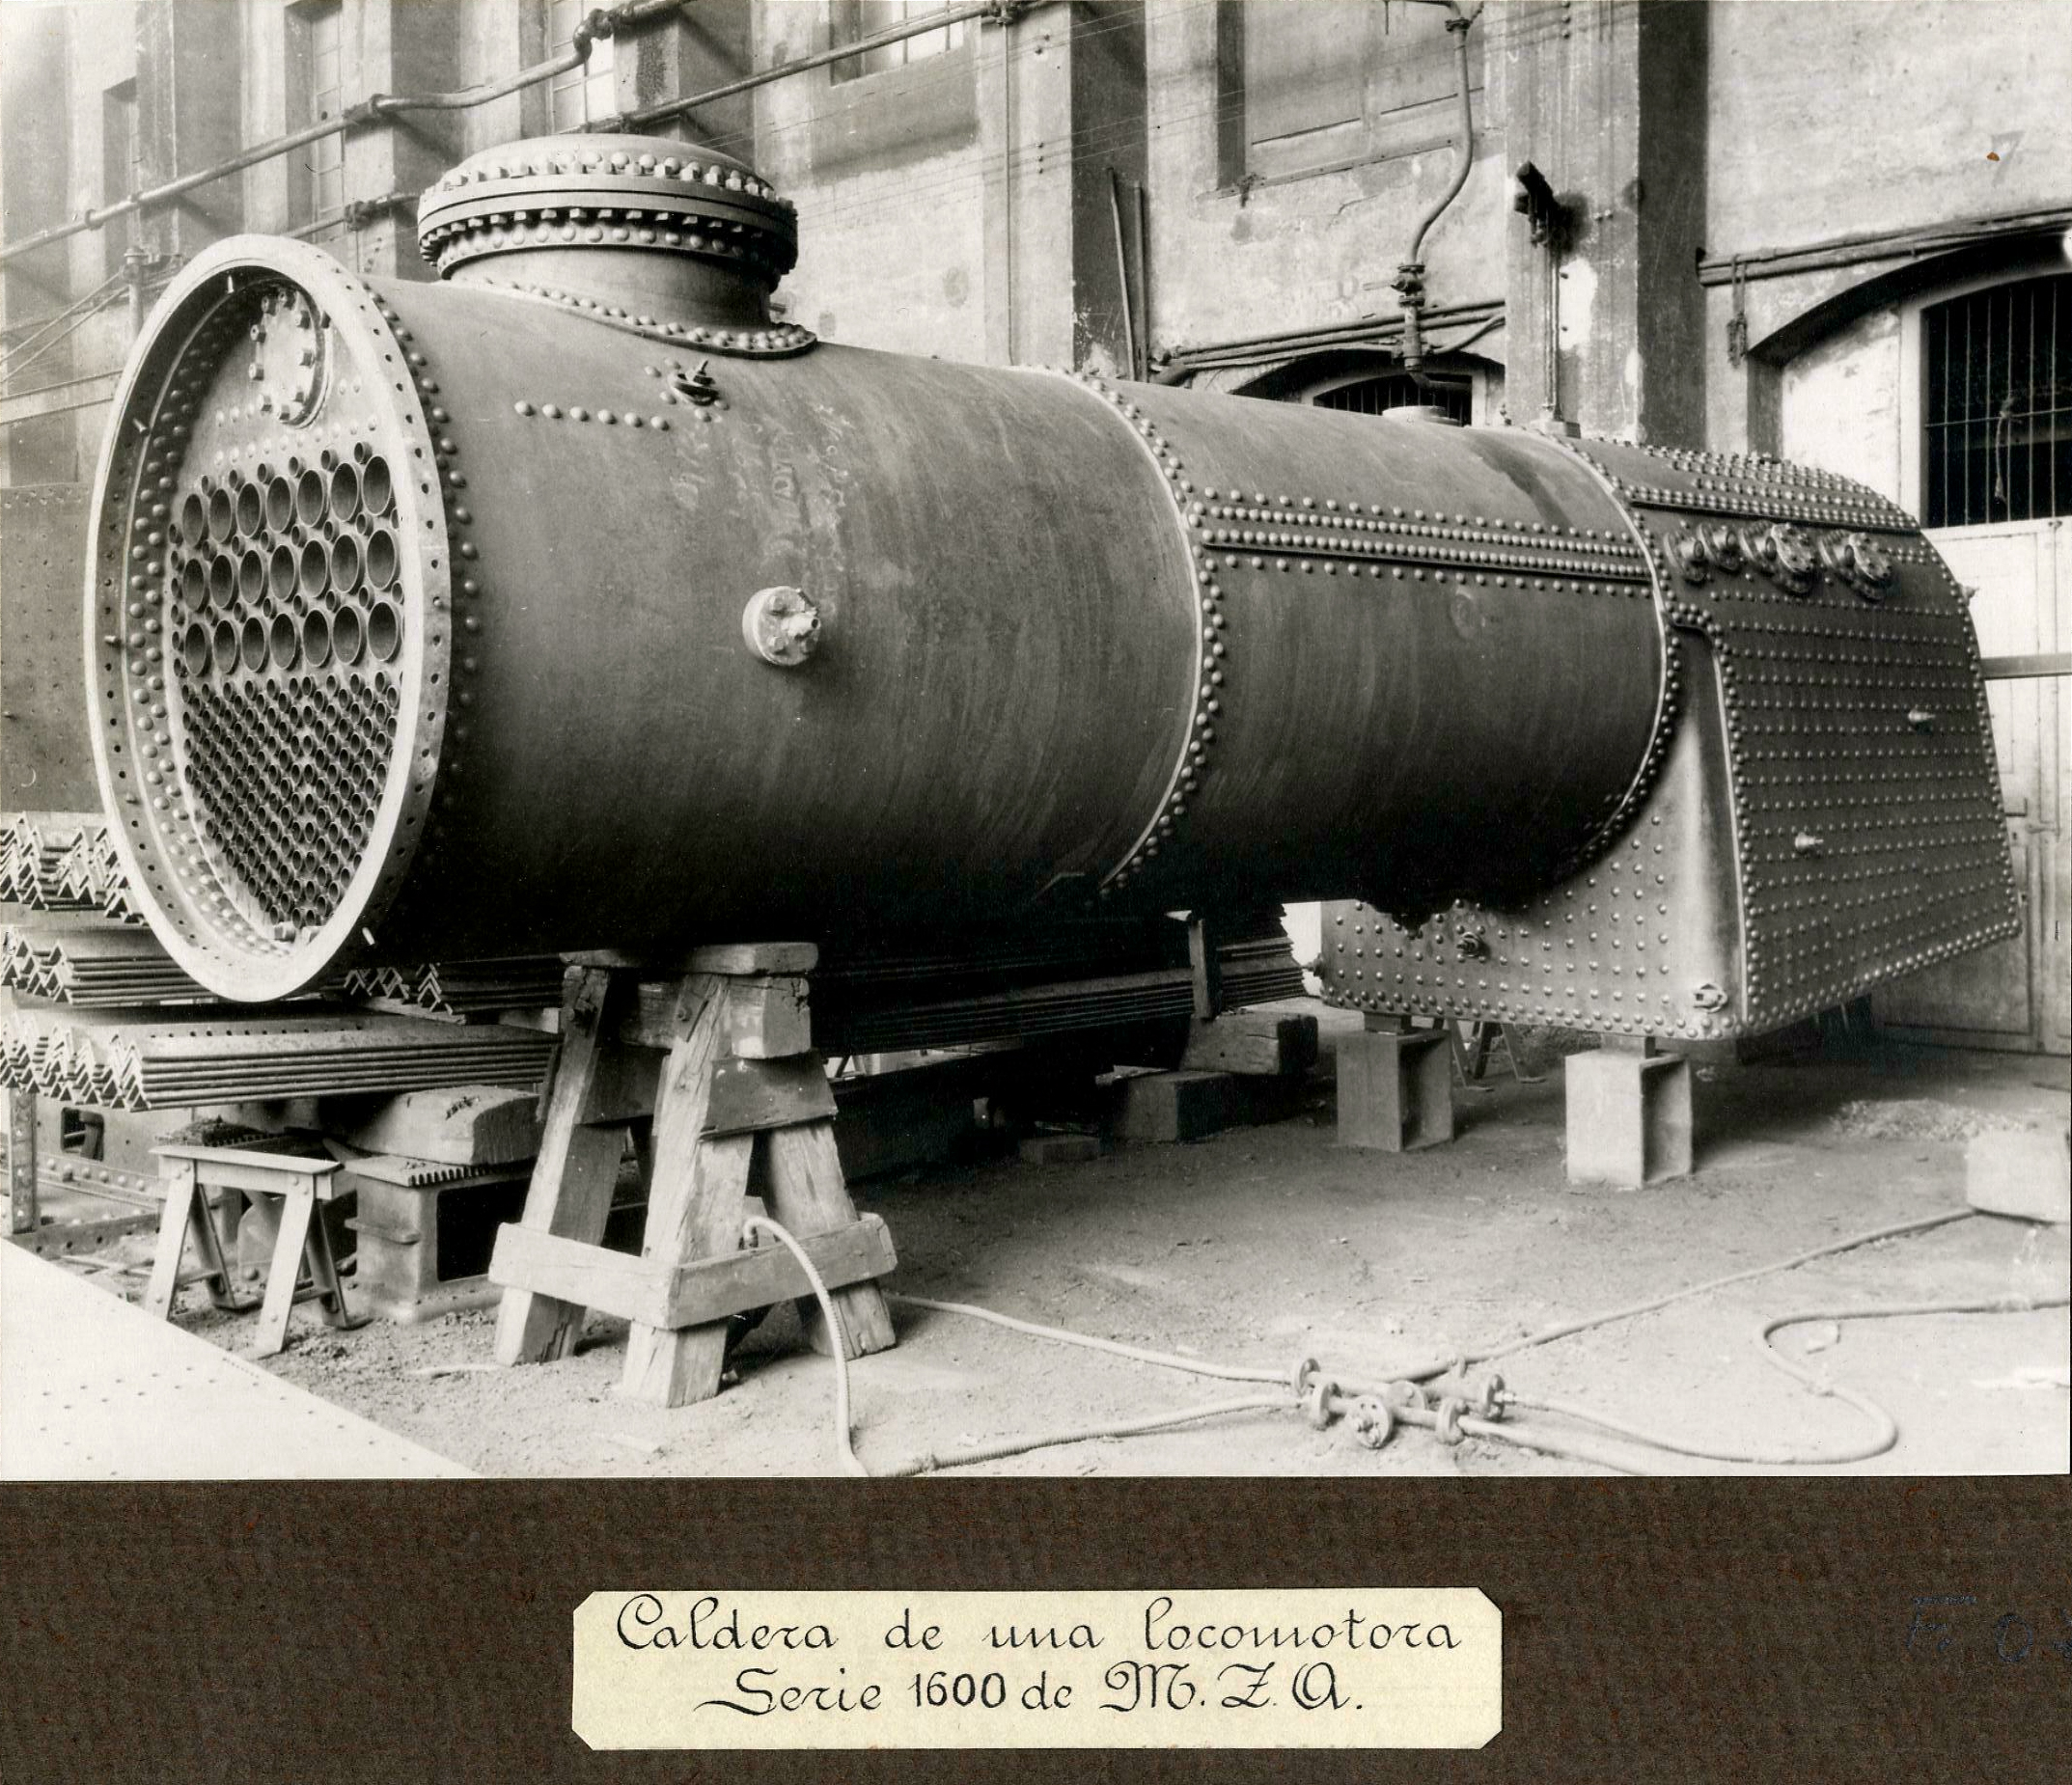 Caldera de una locomotora, serie 1600 de M.Z.A. 1900